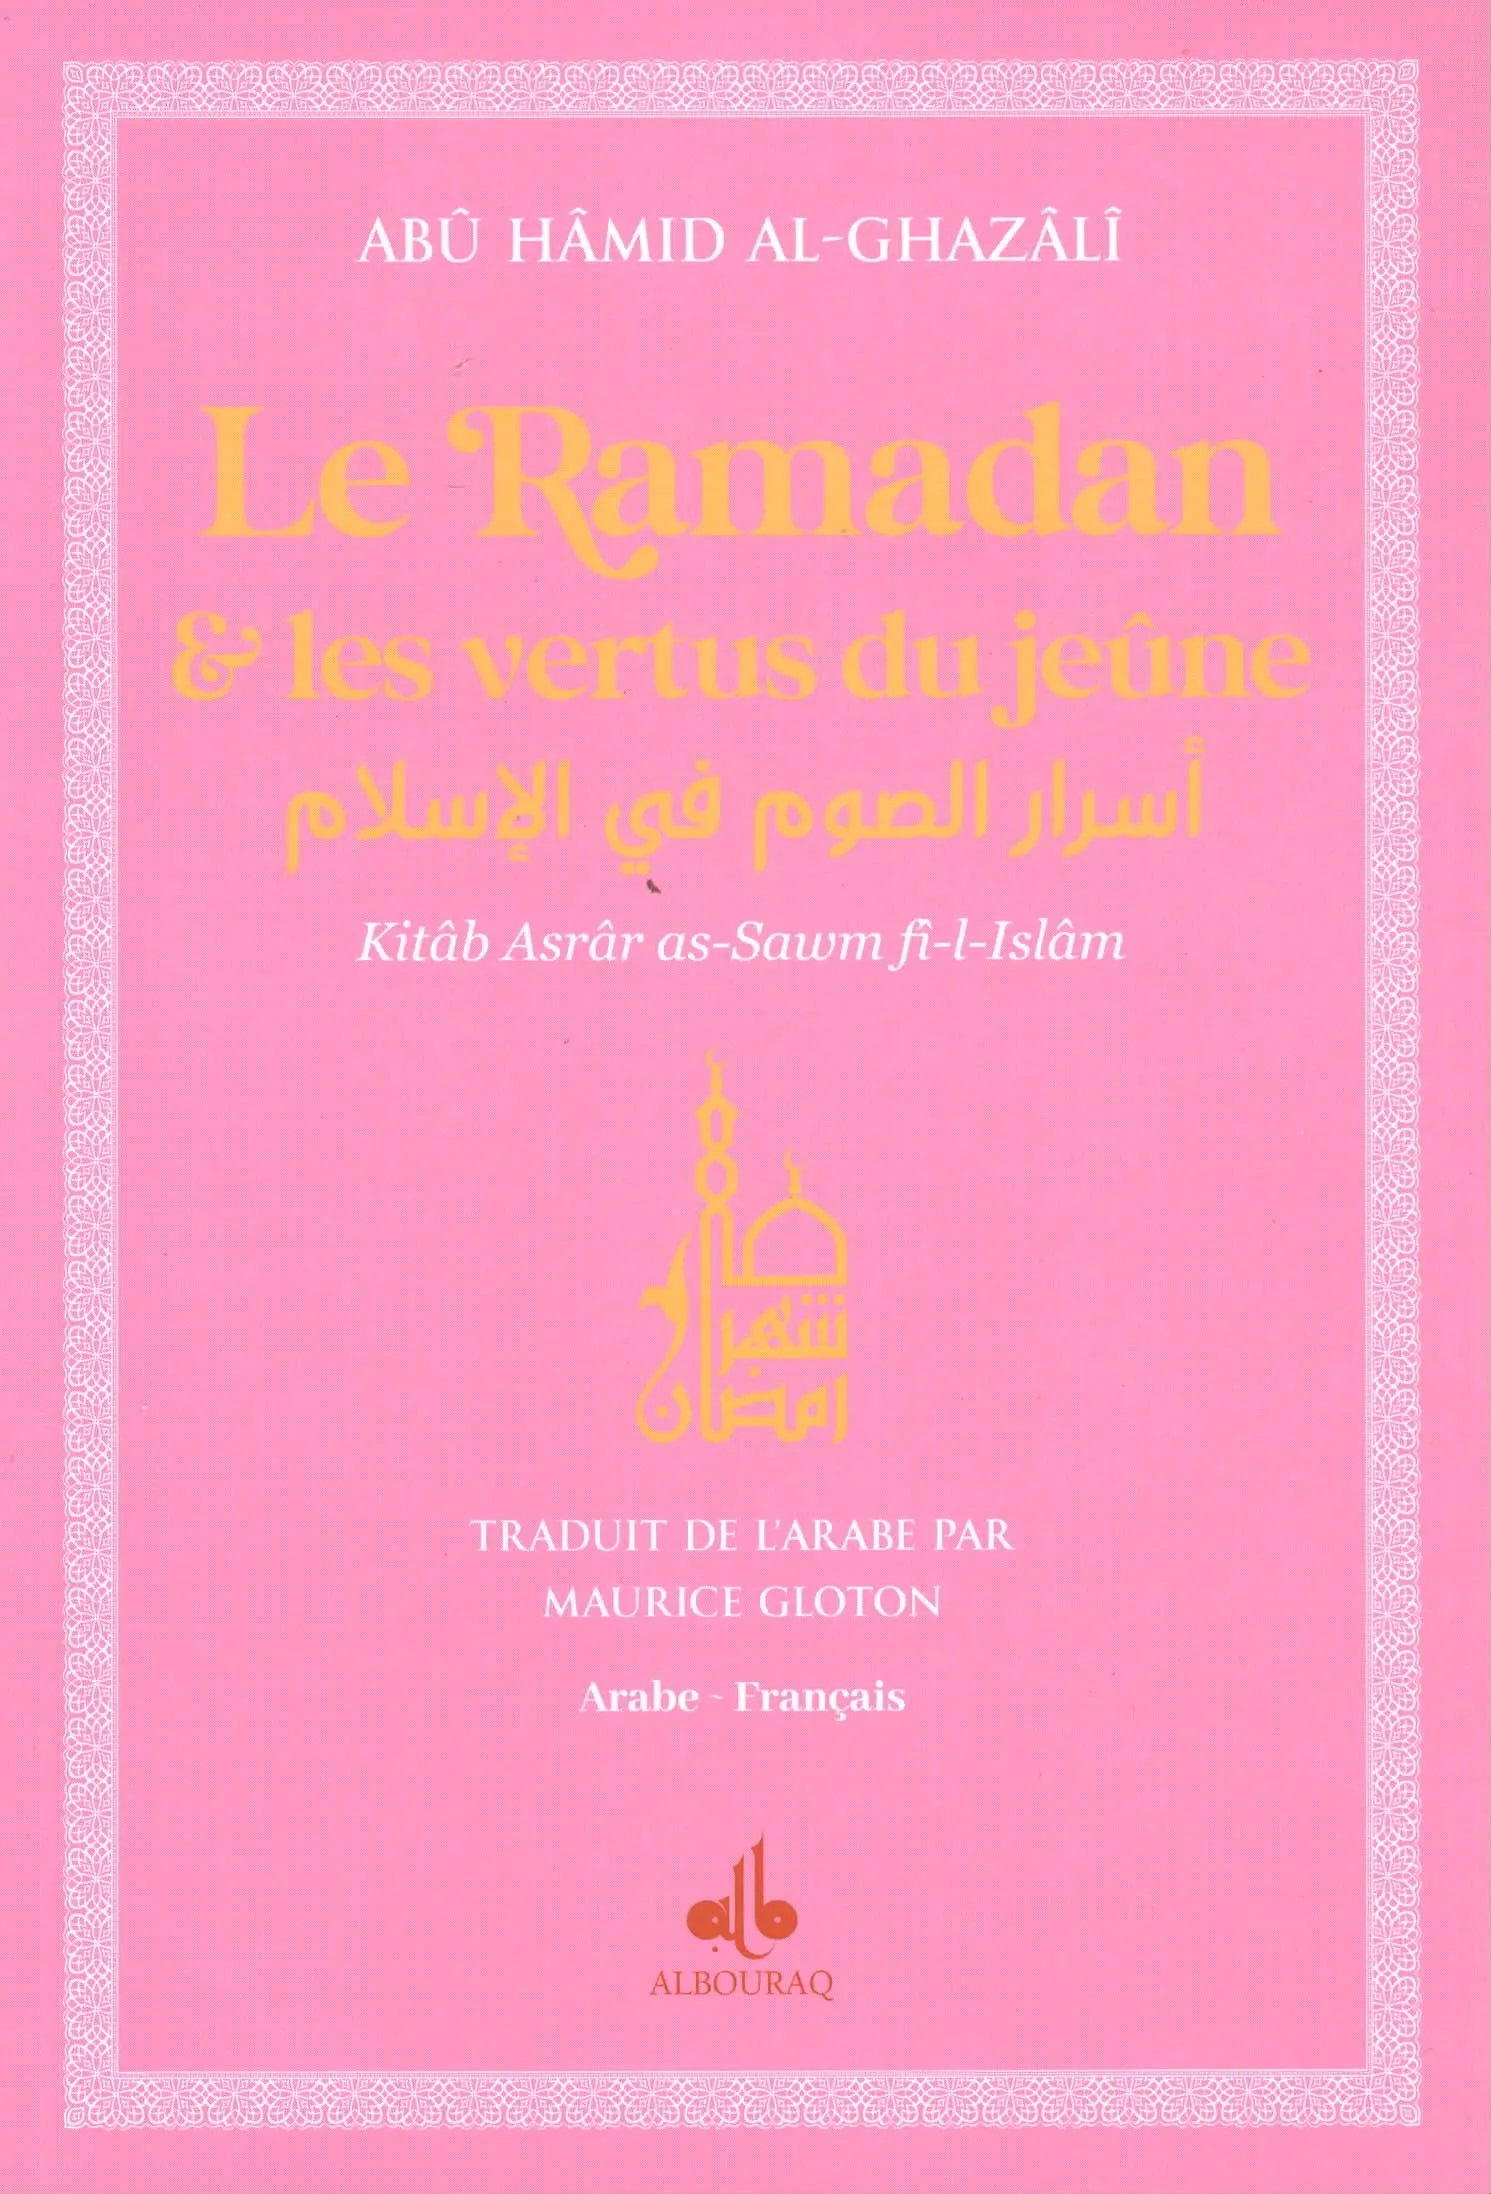 Le Ramadan & les vertus du jeûne par Abu Hamid Al-Ghazali Rose Albouraq